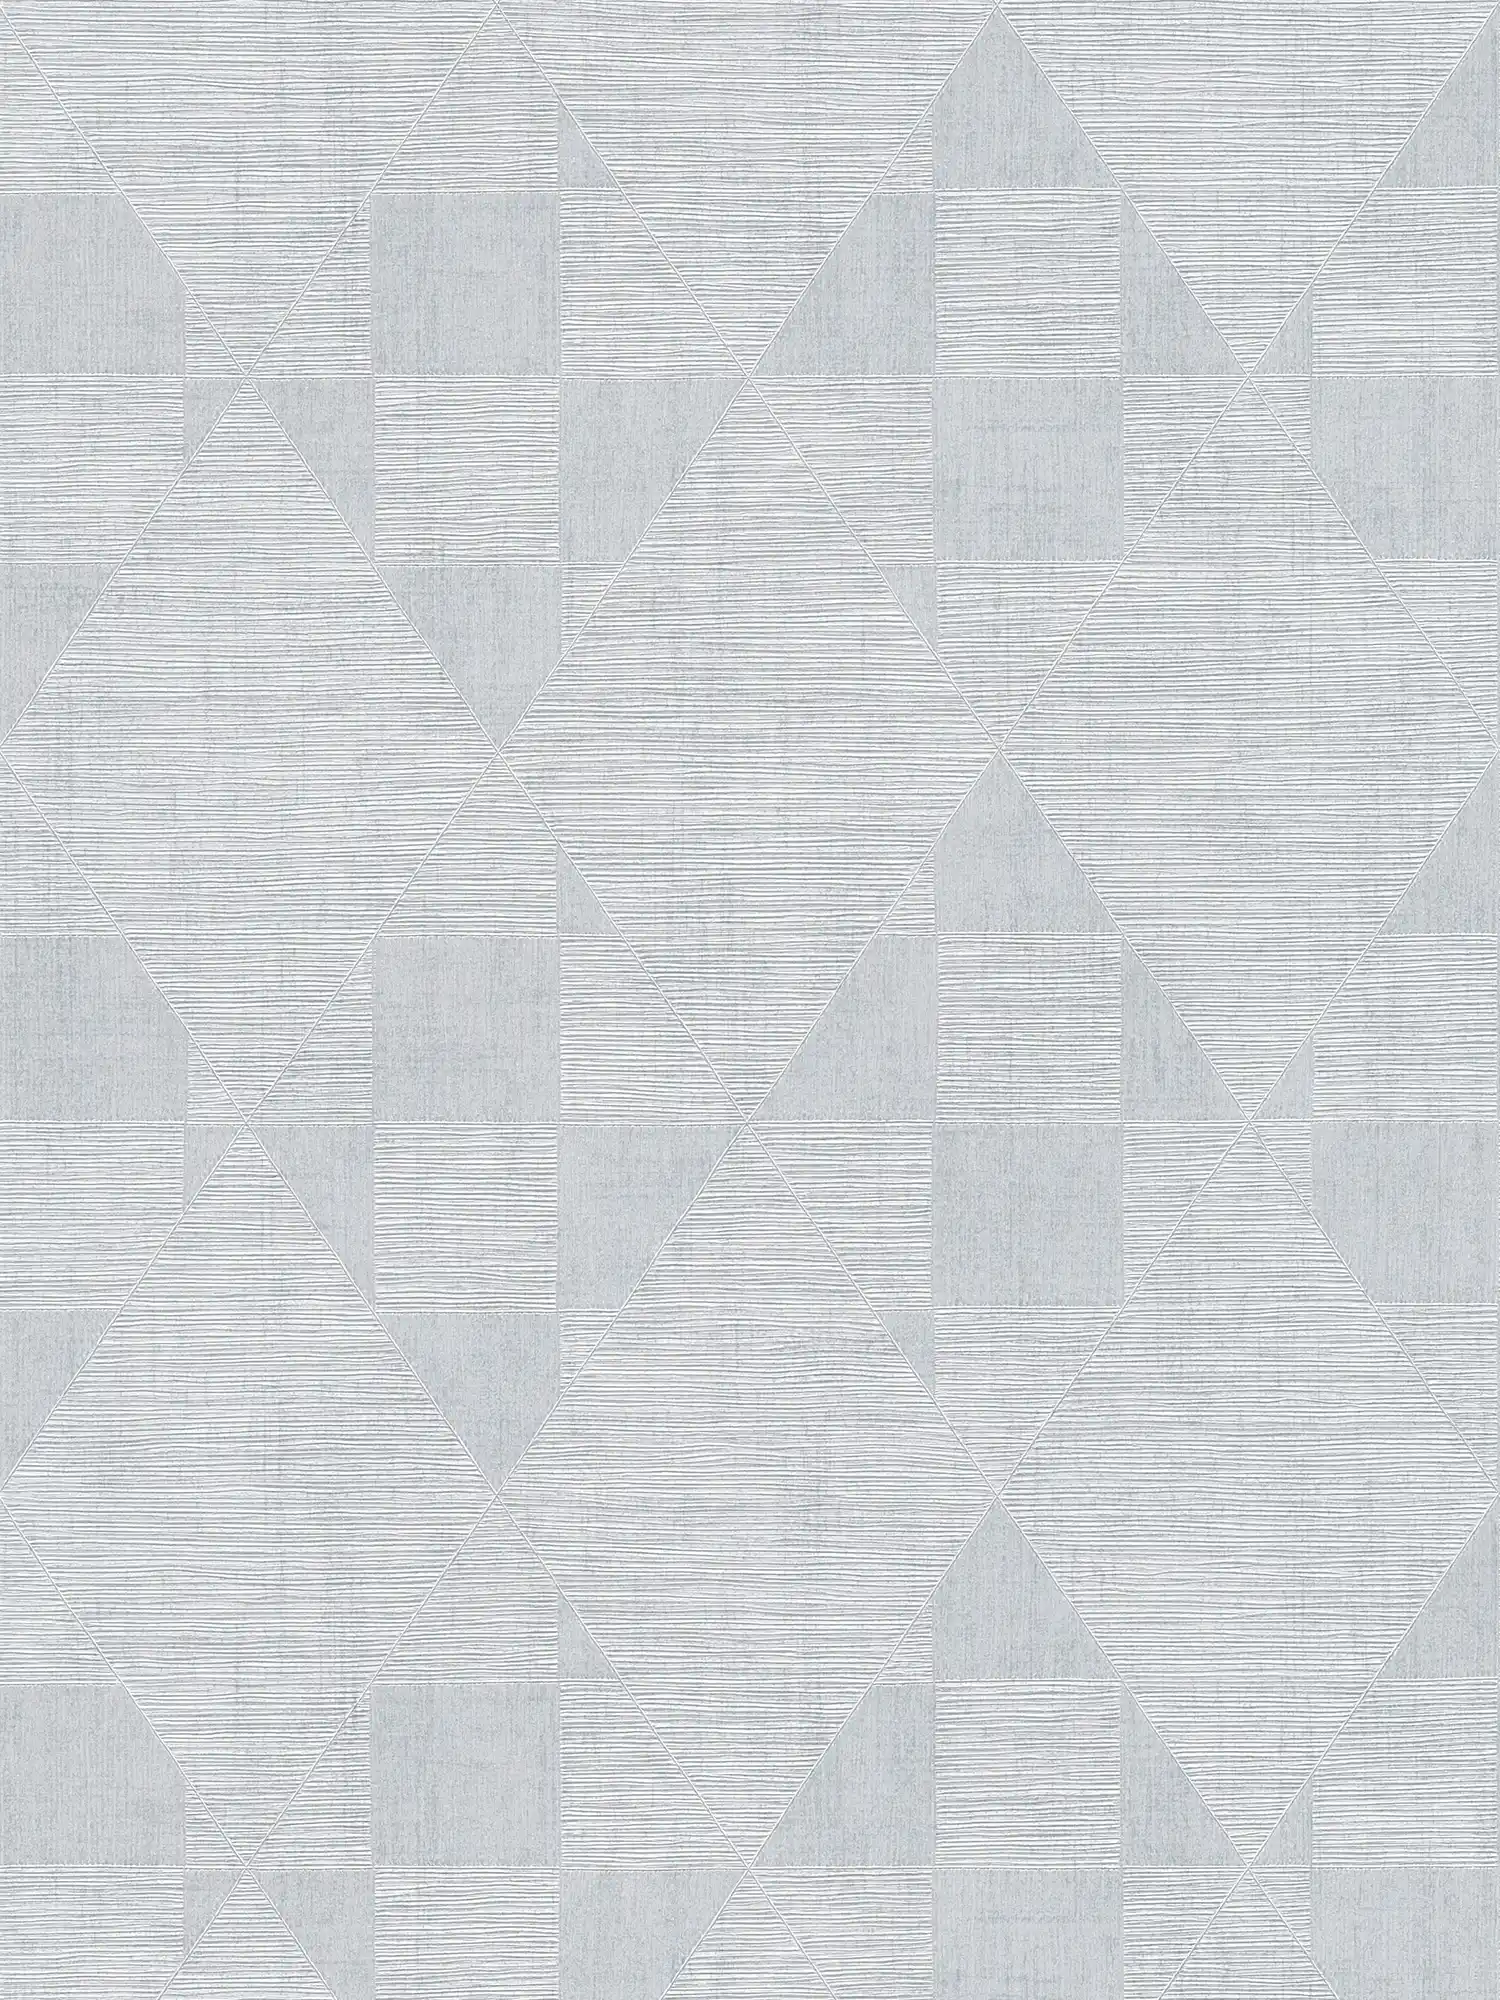 Wallpaper silver metallic design with geometric pattern - grey
